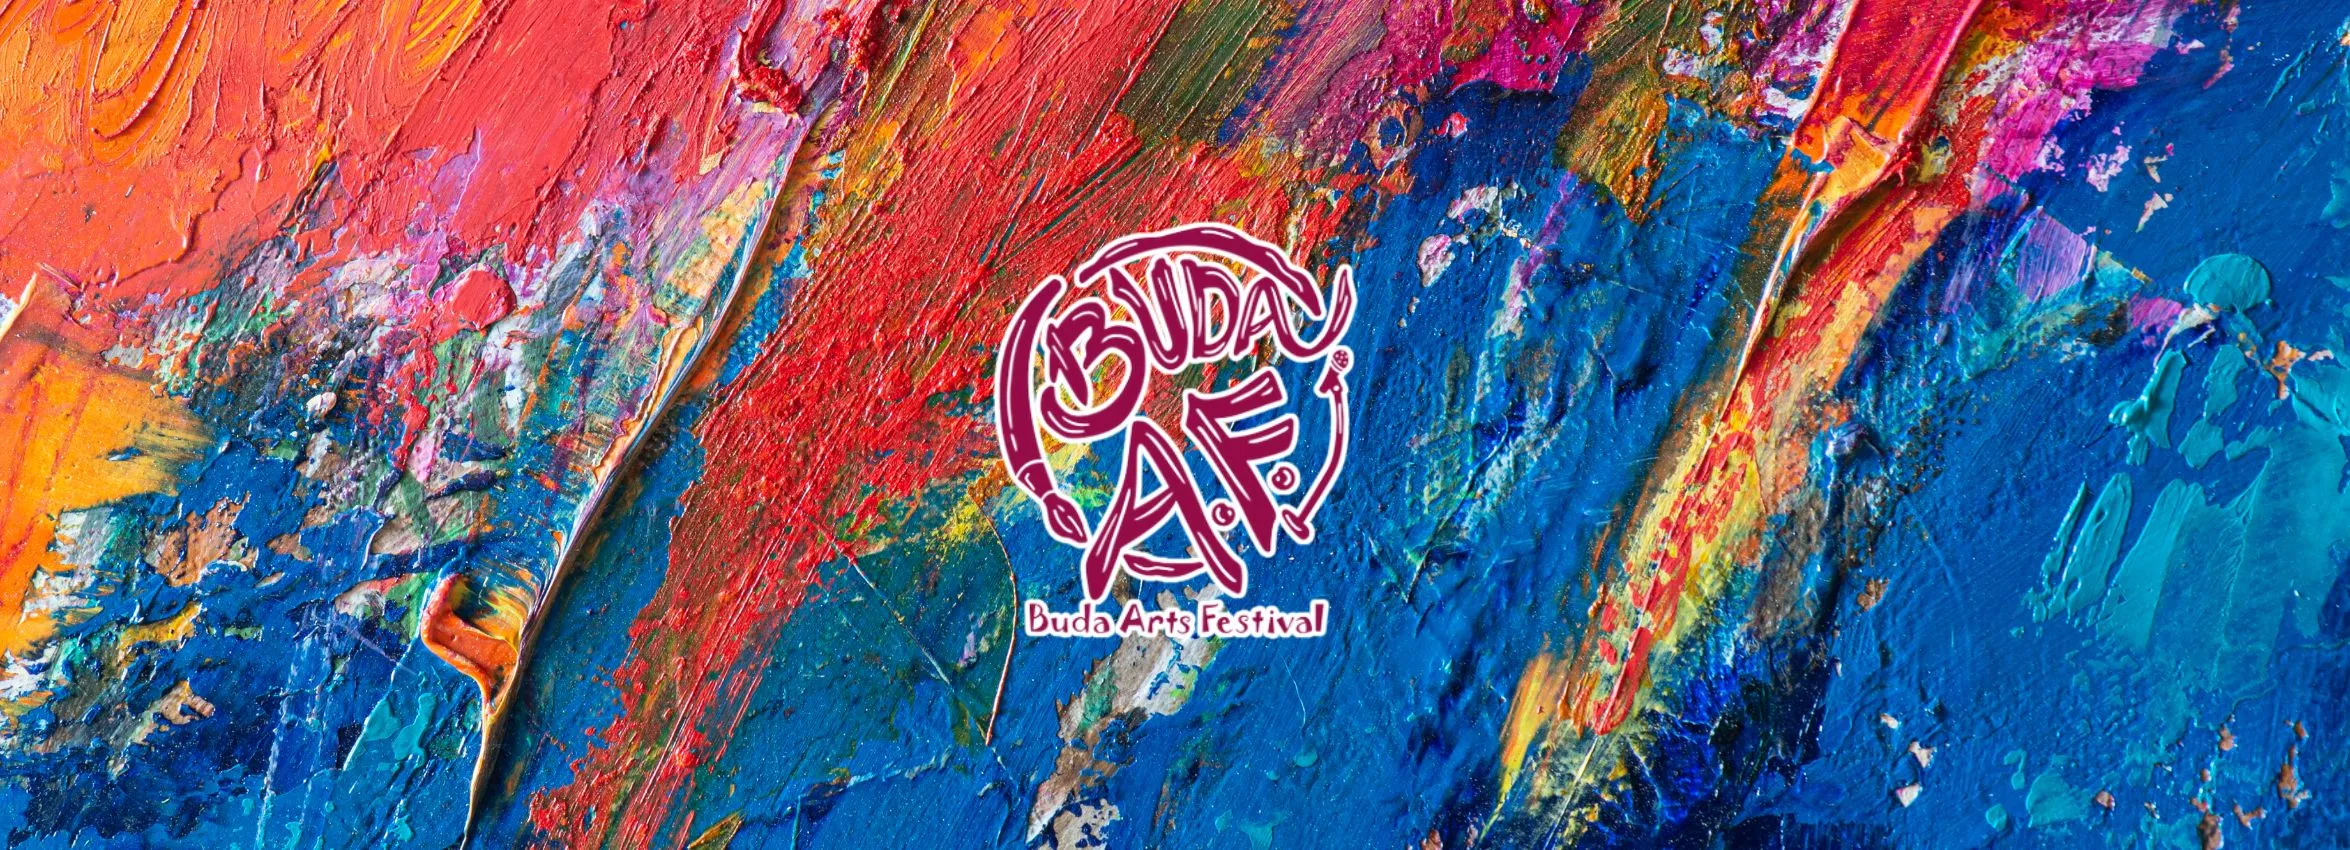 Buda-Arts-Festival_Desktop_ET